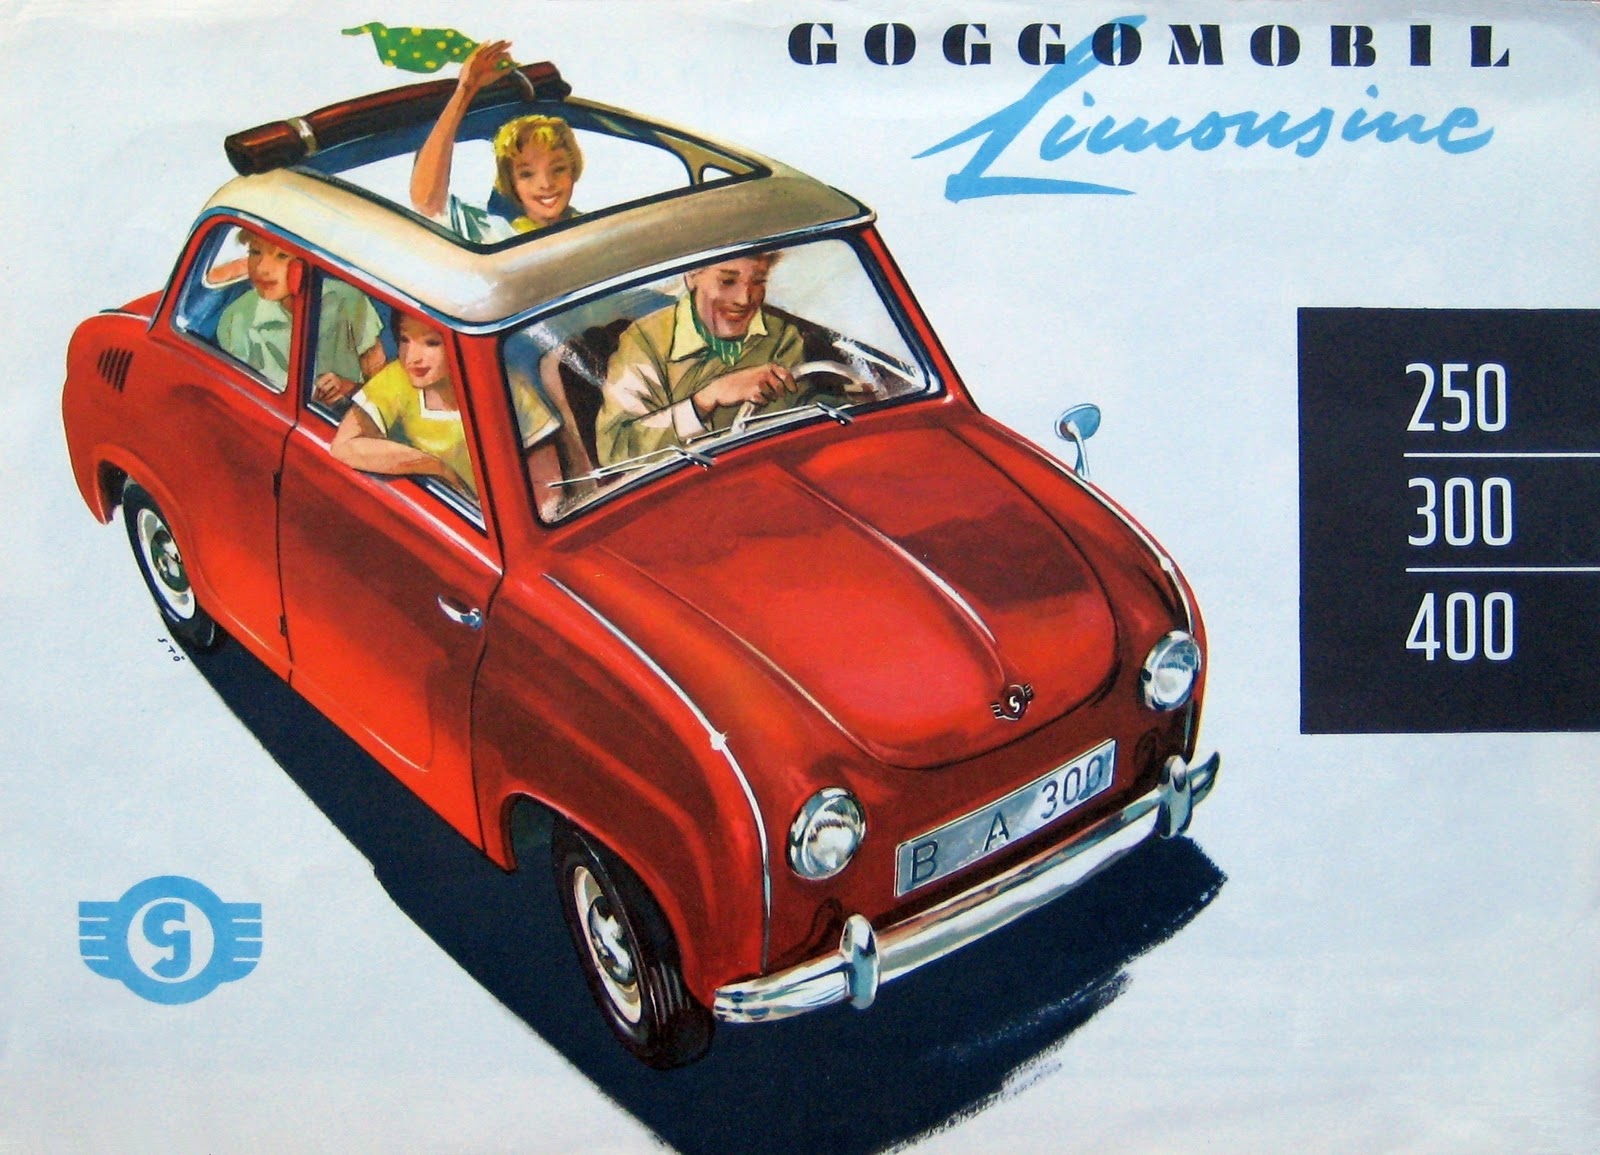 Glas Goggomobil Limousine (1955-1969)